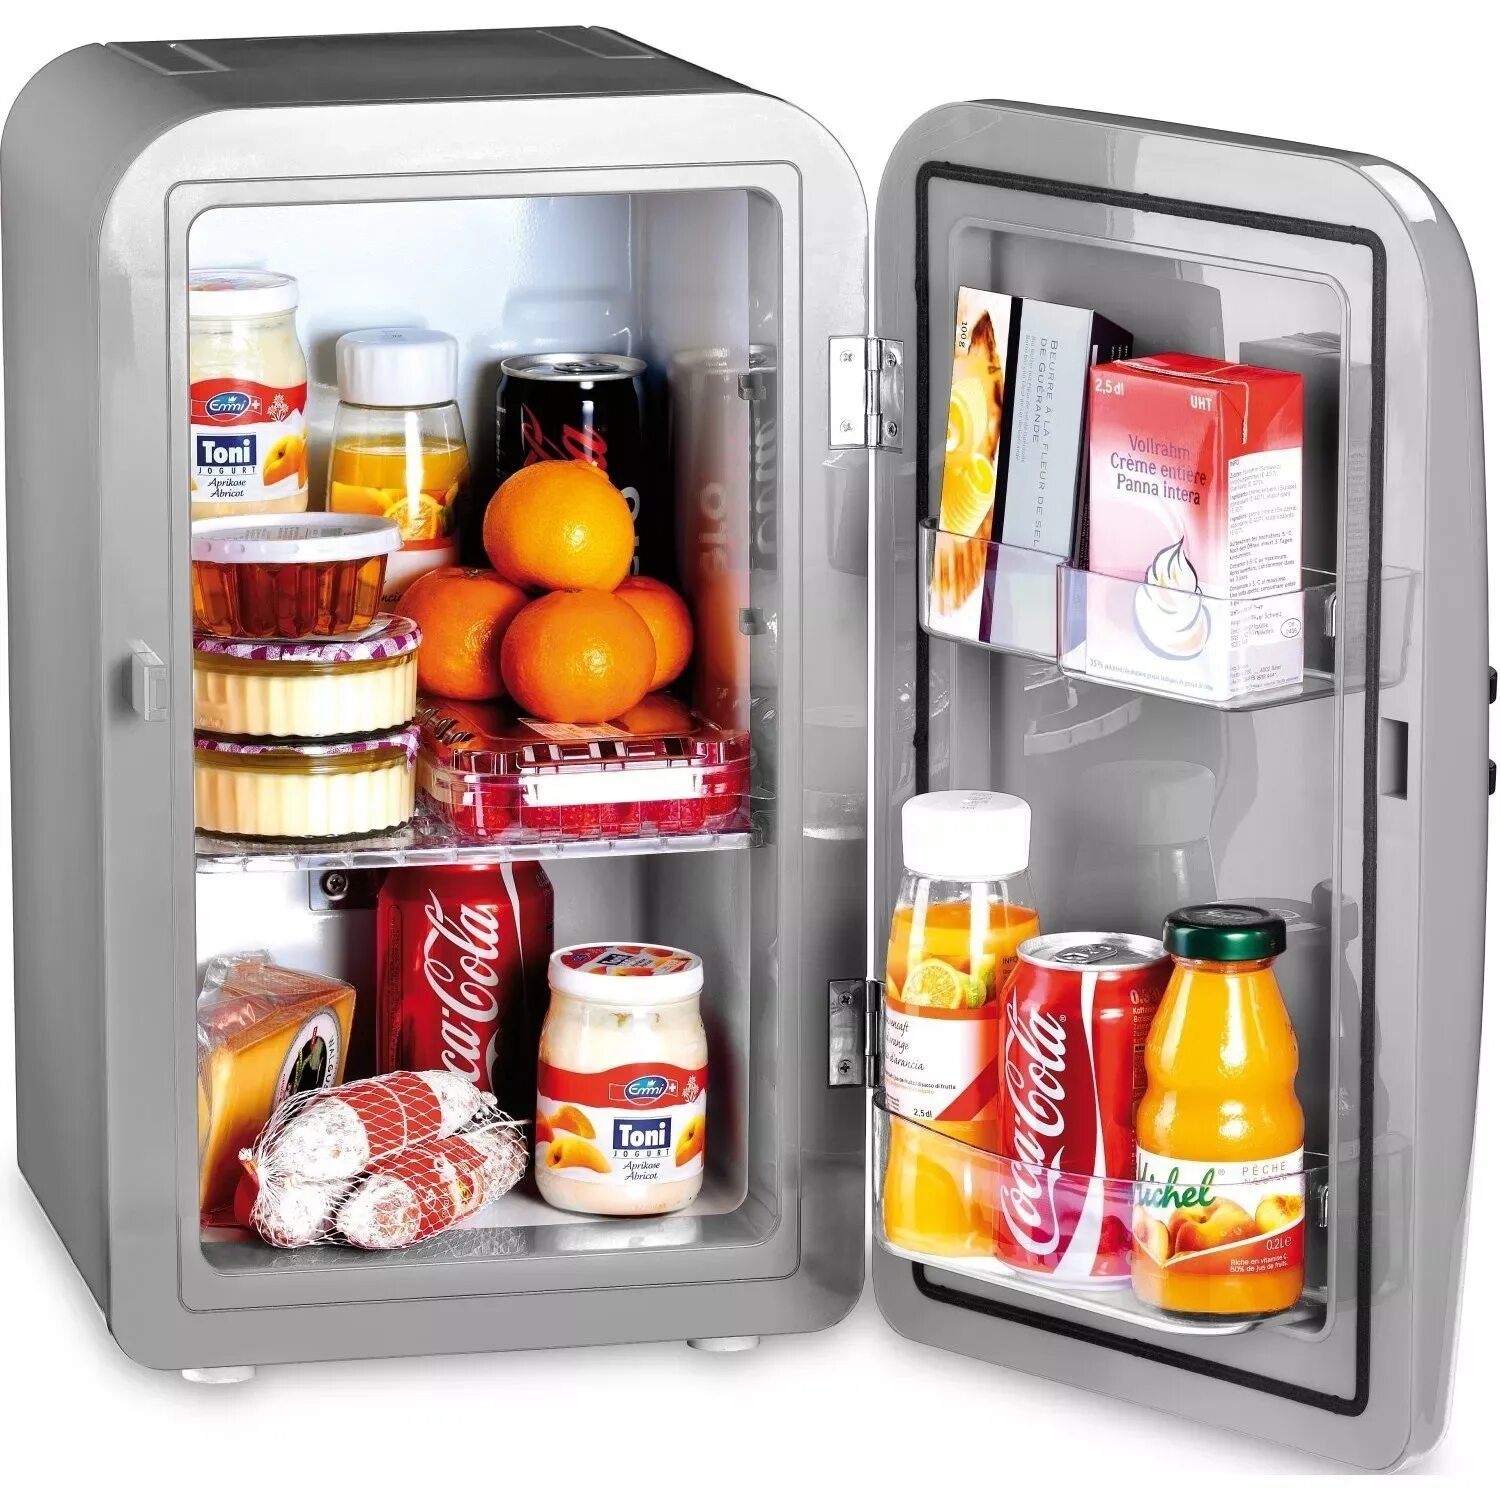 Frescolino Plus мини холодильник. Холодильник Trisa Frescolino. Автохолодильник Trisa Frescolino Plus. Мини холодильник 220 вольт. Холодильник купить 220 вольт